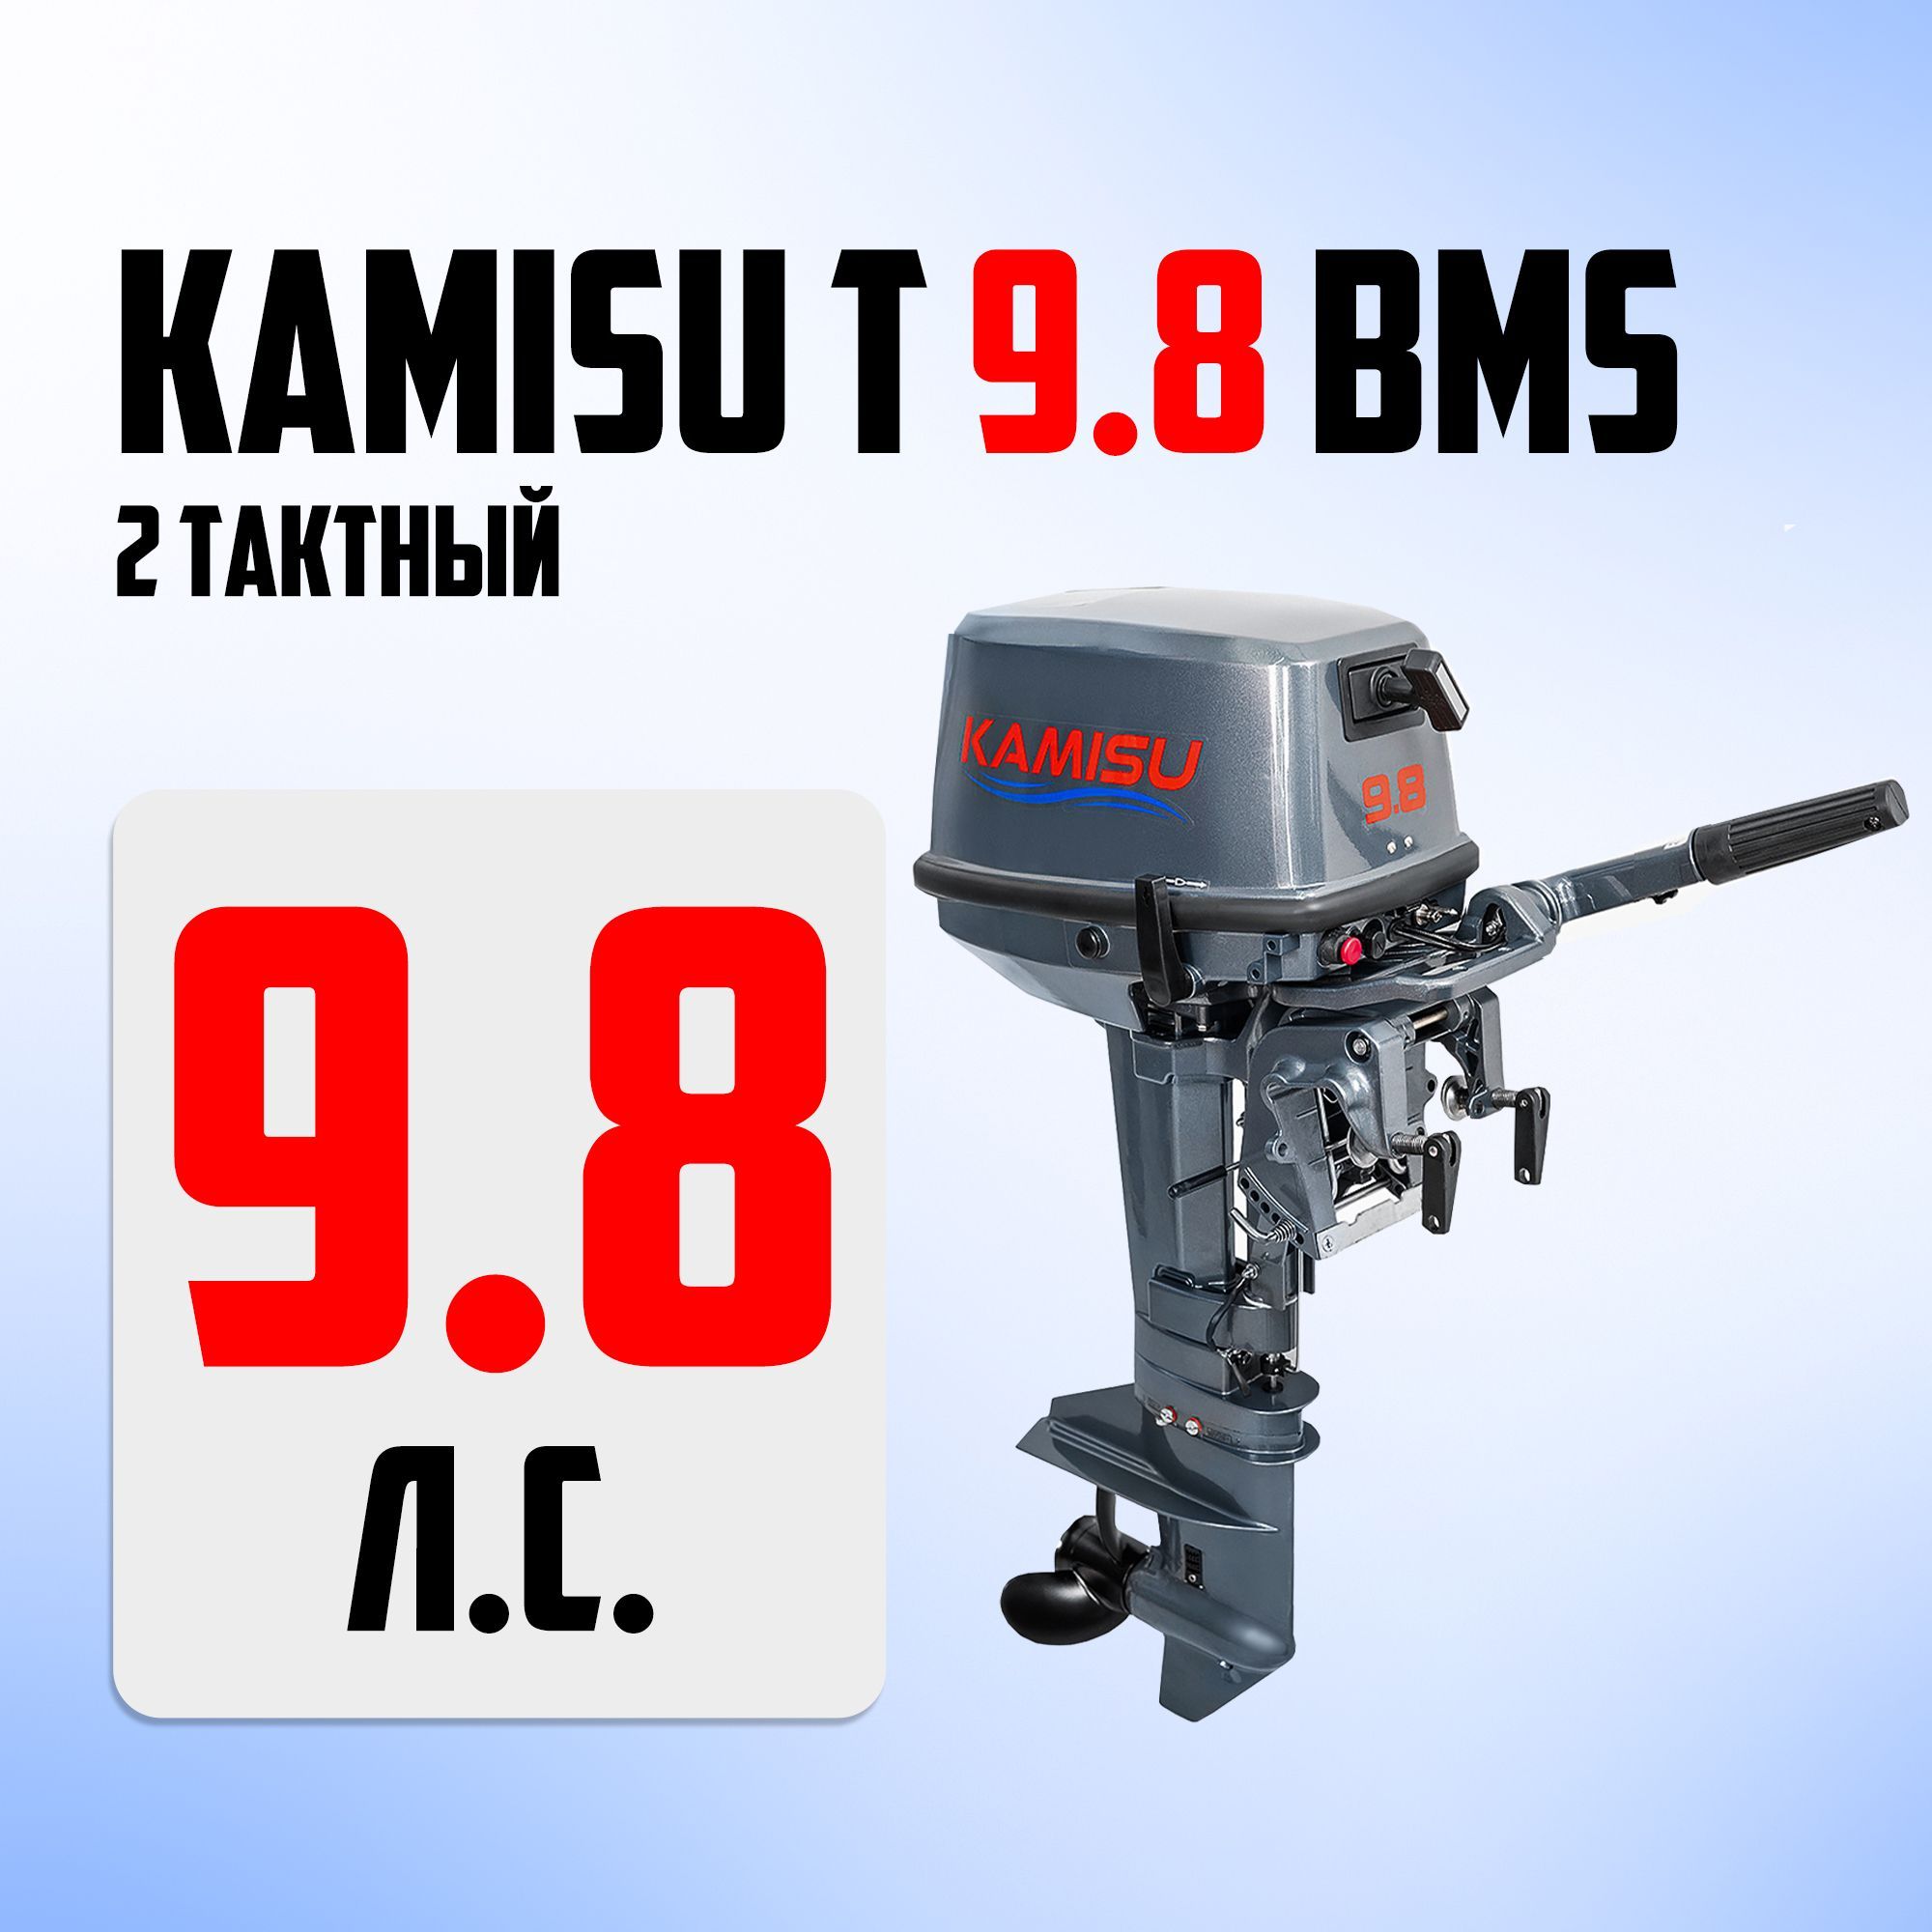 Kamisu лодочные моторы производитель. Yamabisi 30. Yamabisi t5bms PNG.